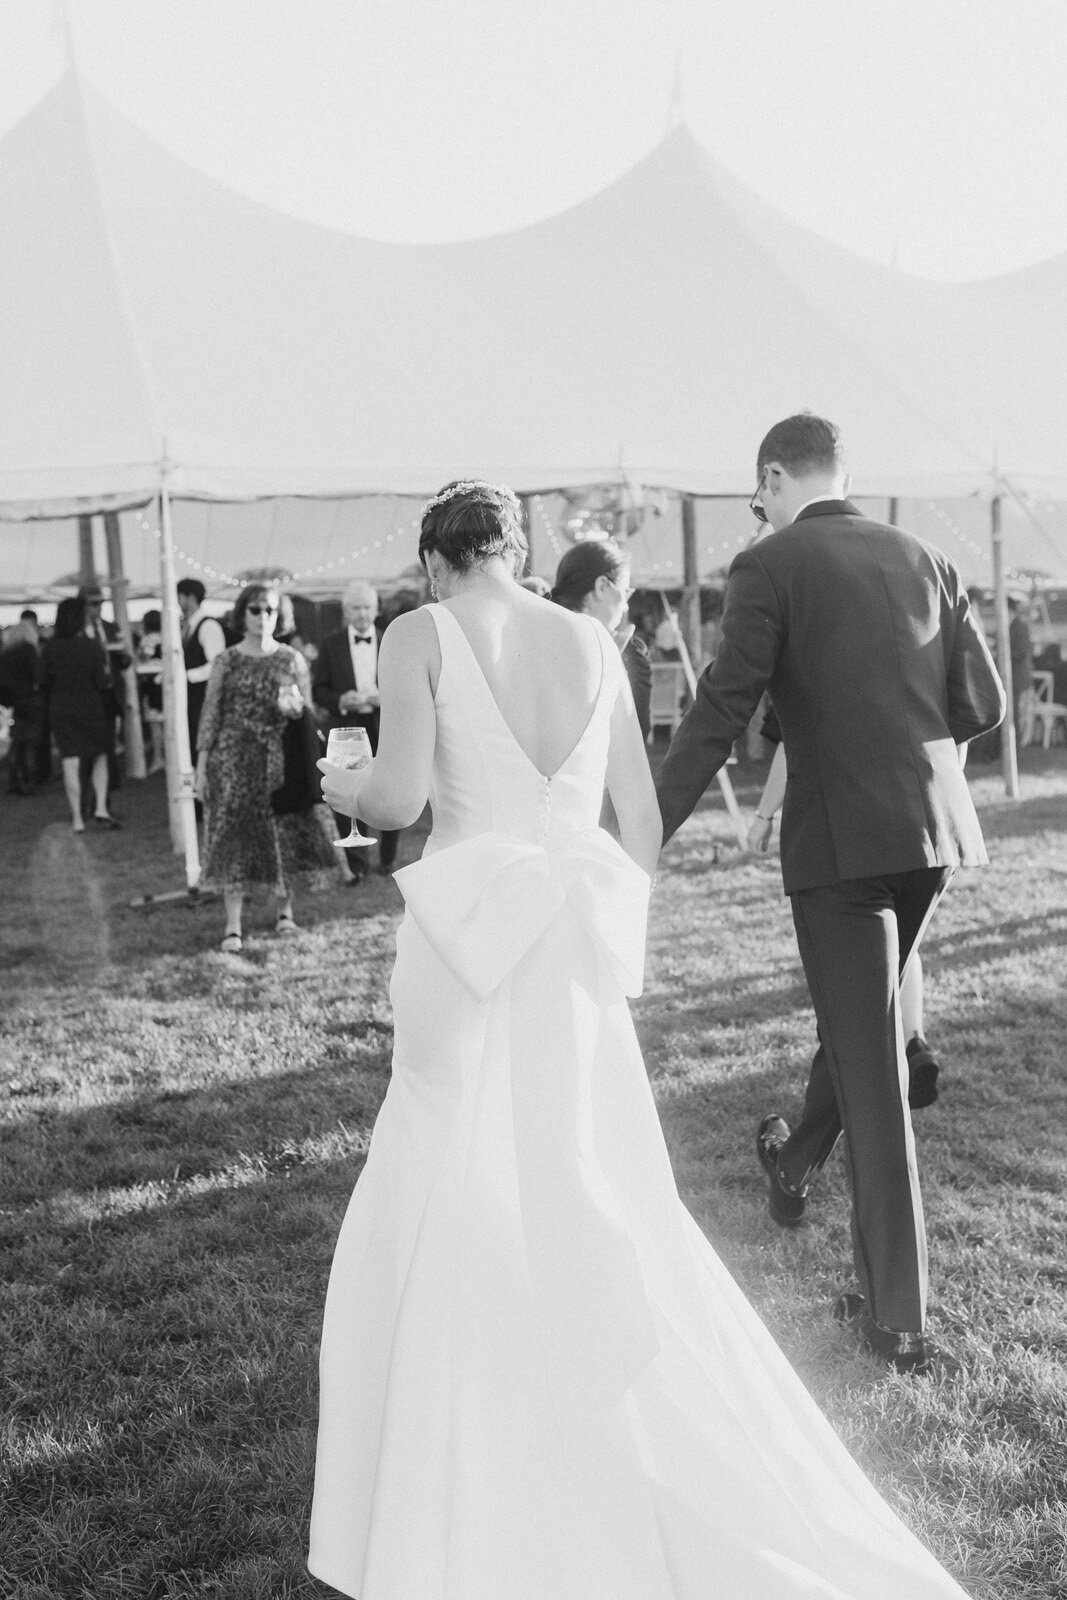 Kate-Murtaugh-Events-Castle-Hill-Inn-Newport-bride-groom-sailcloth-tent-wedding-planner